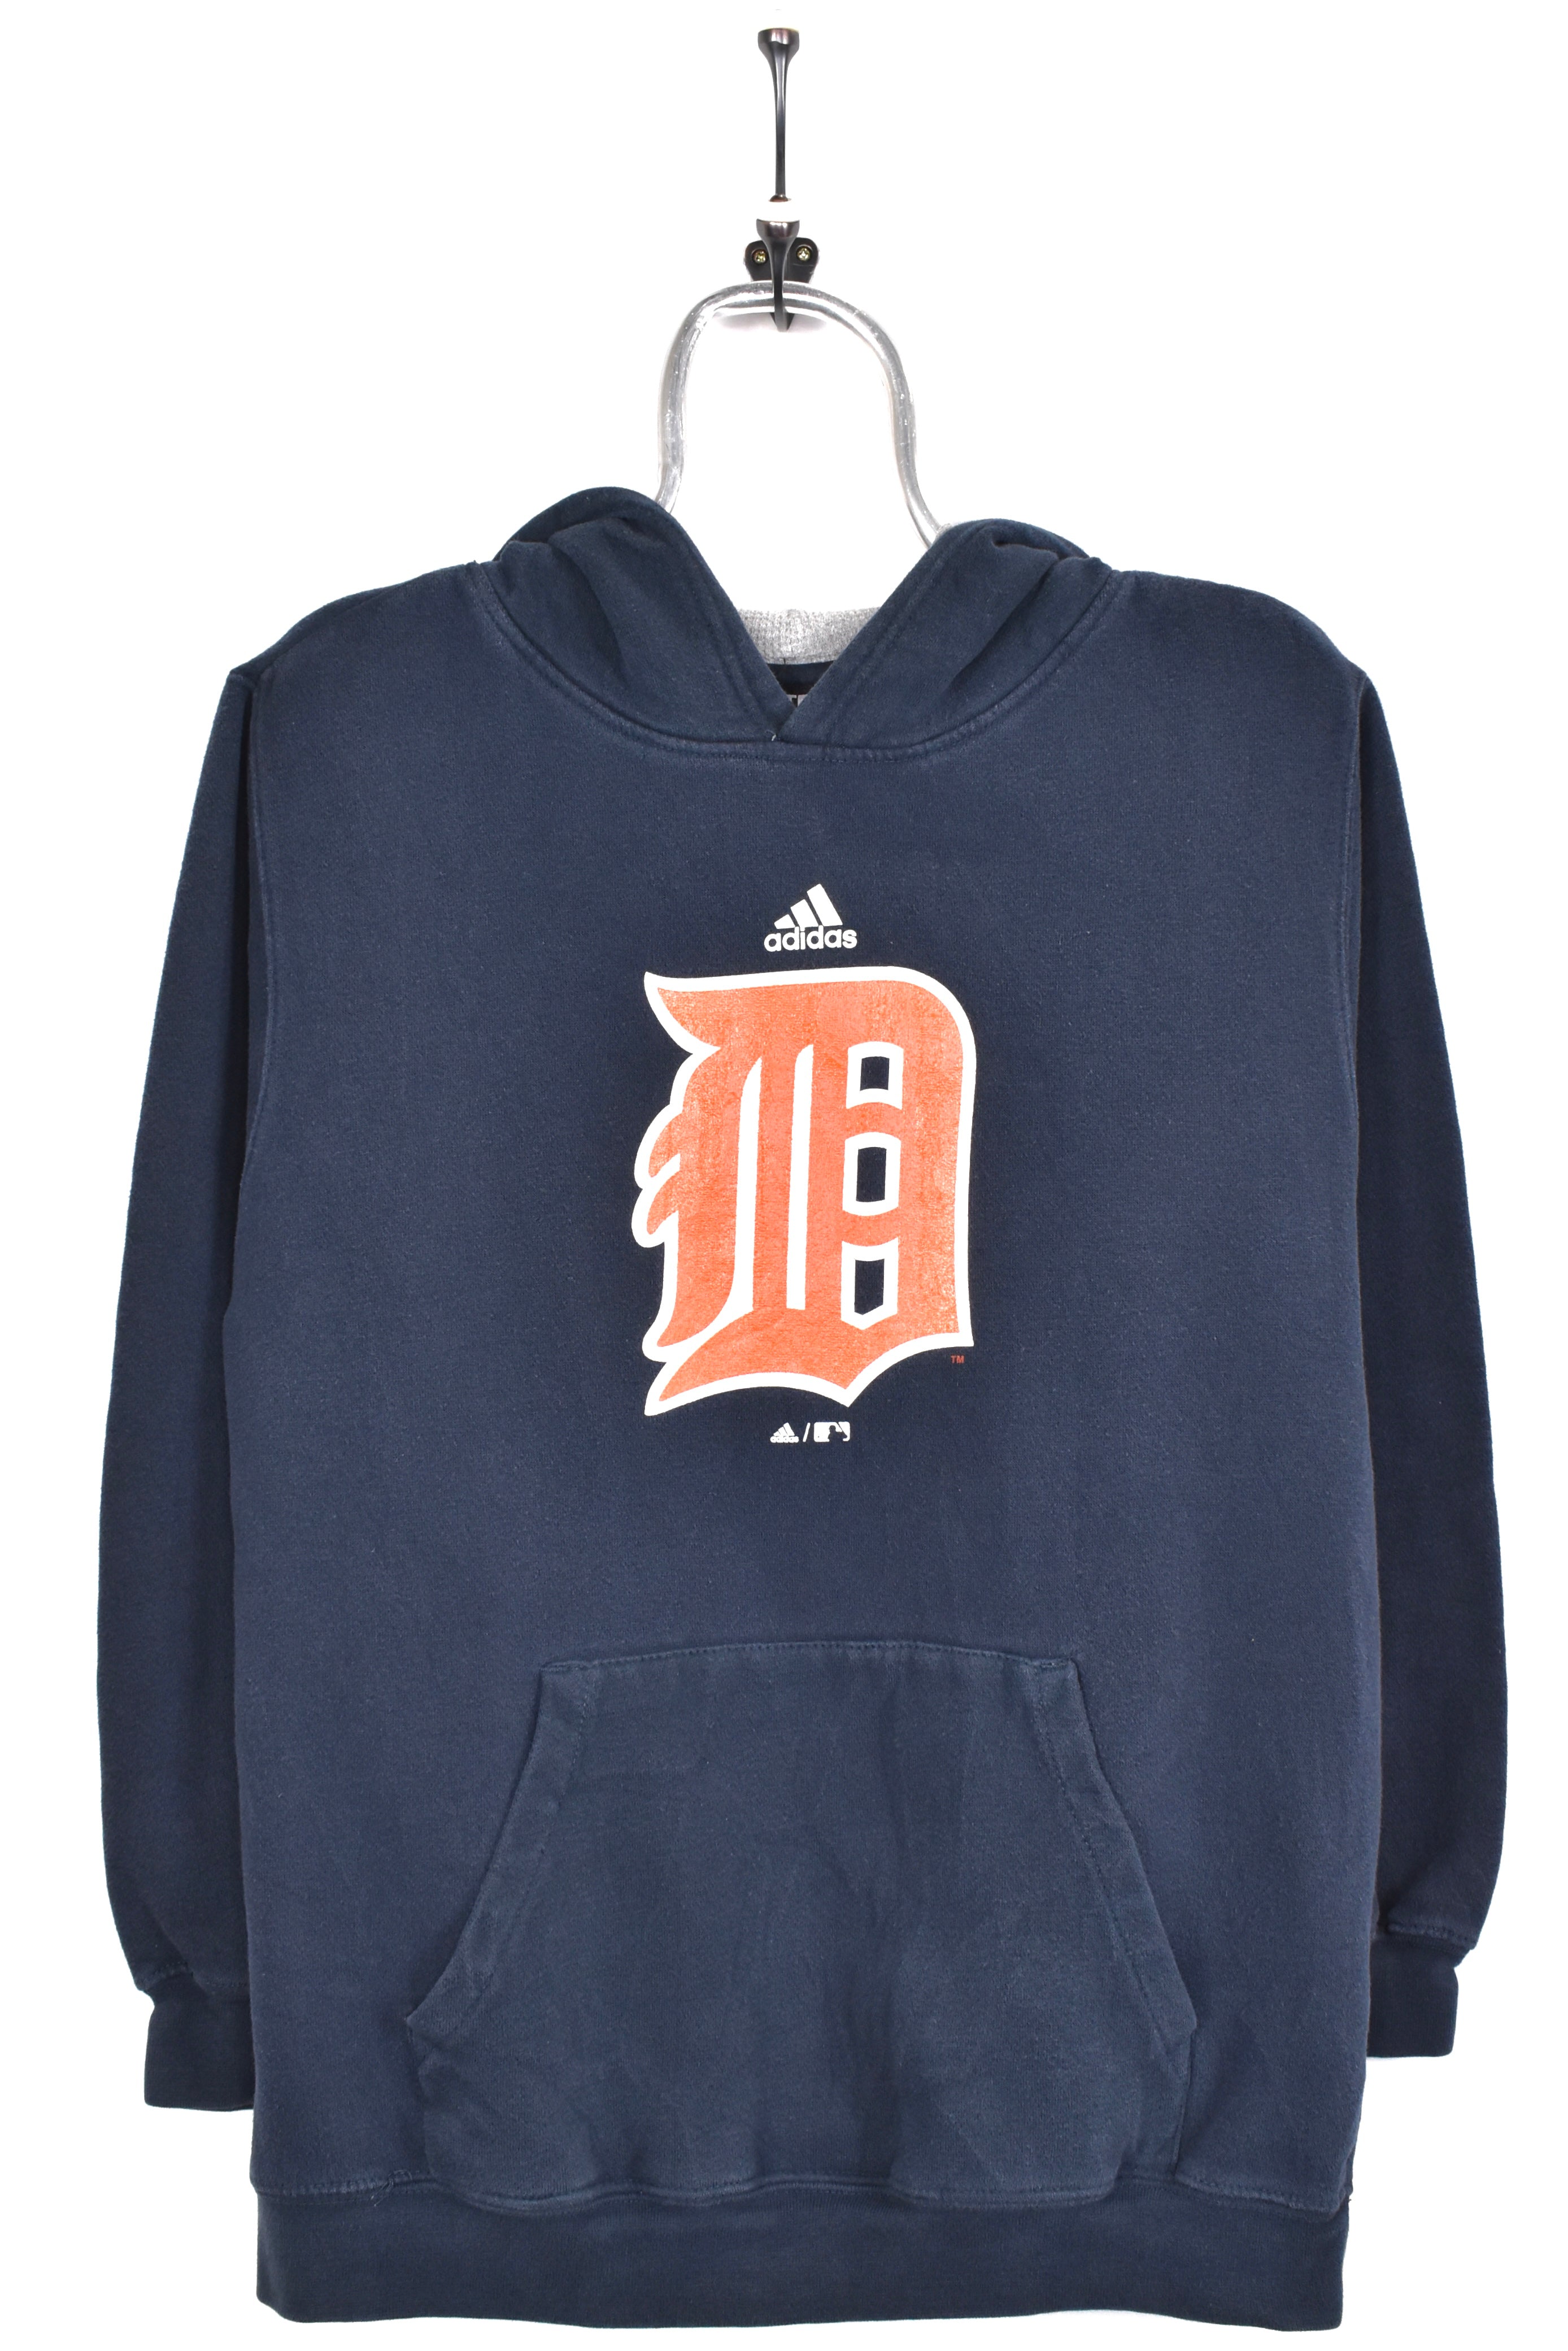 Detroit Tigers Vintage MLB T-Shirt Sweatshirt Hoodie Gifts for